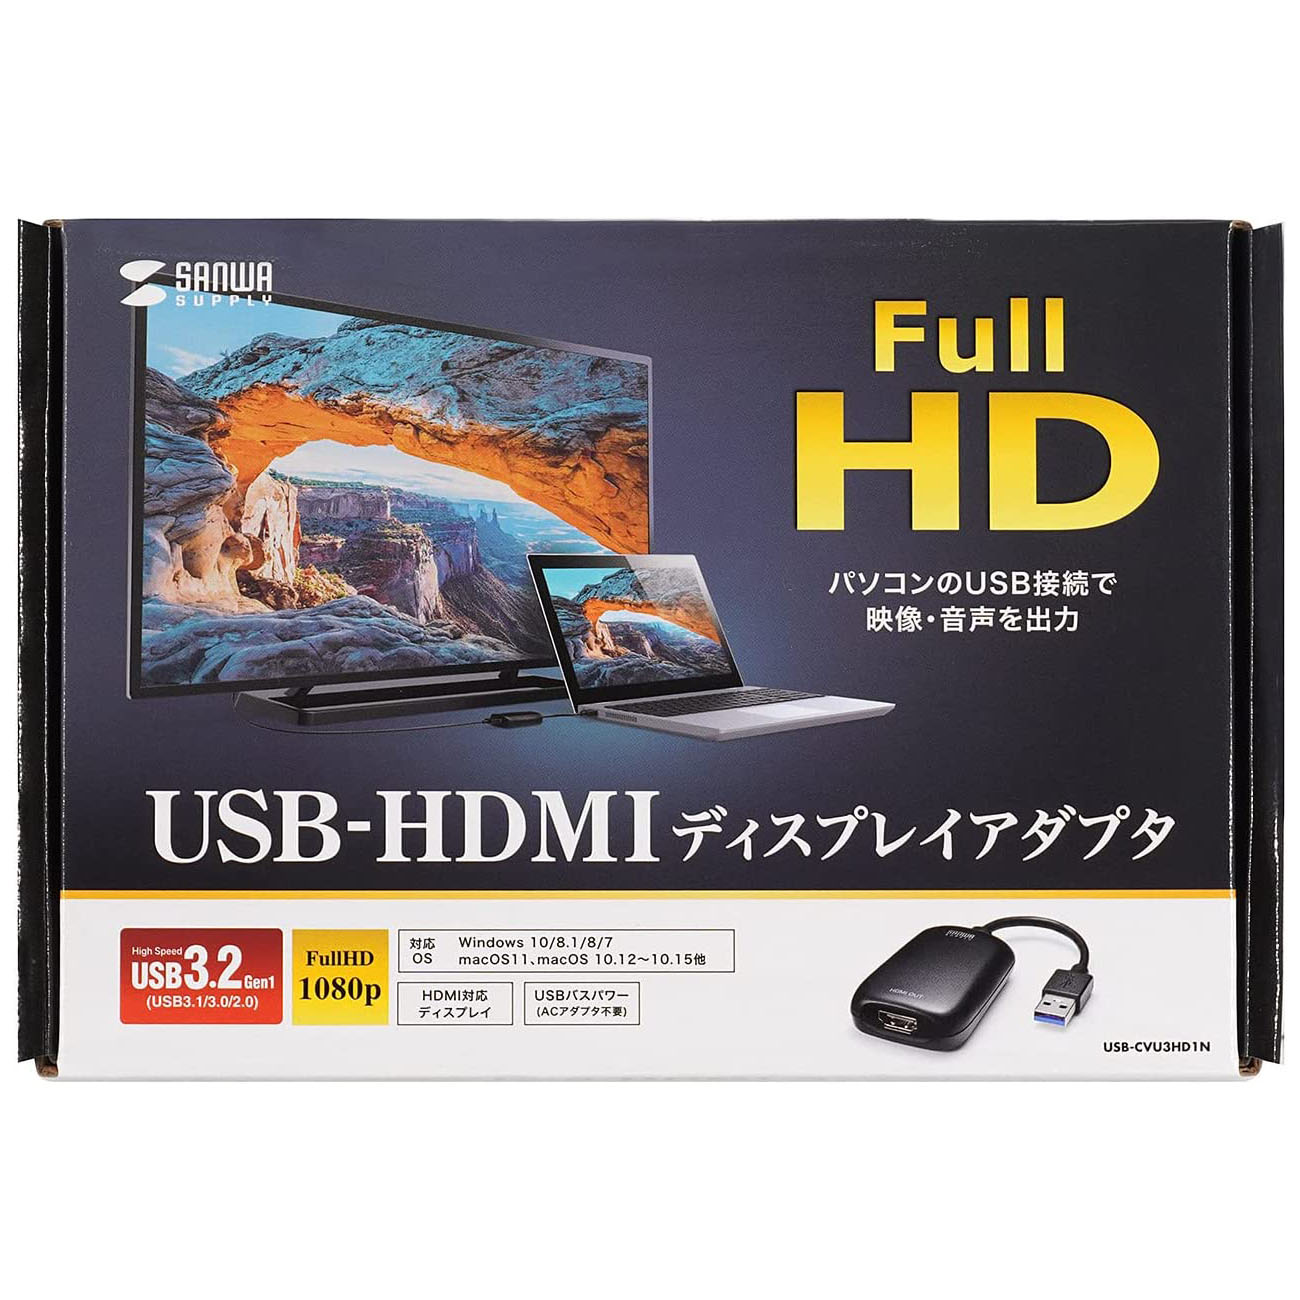 【70％OFF】 USB3.2-HDMIディスプレイアダプタ USB-CVU3HD1N 1080P対応 変換アダプタ